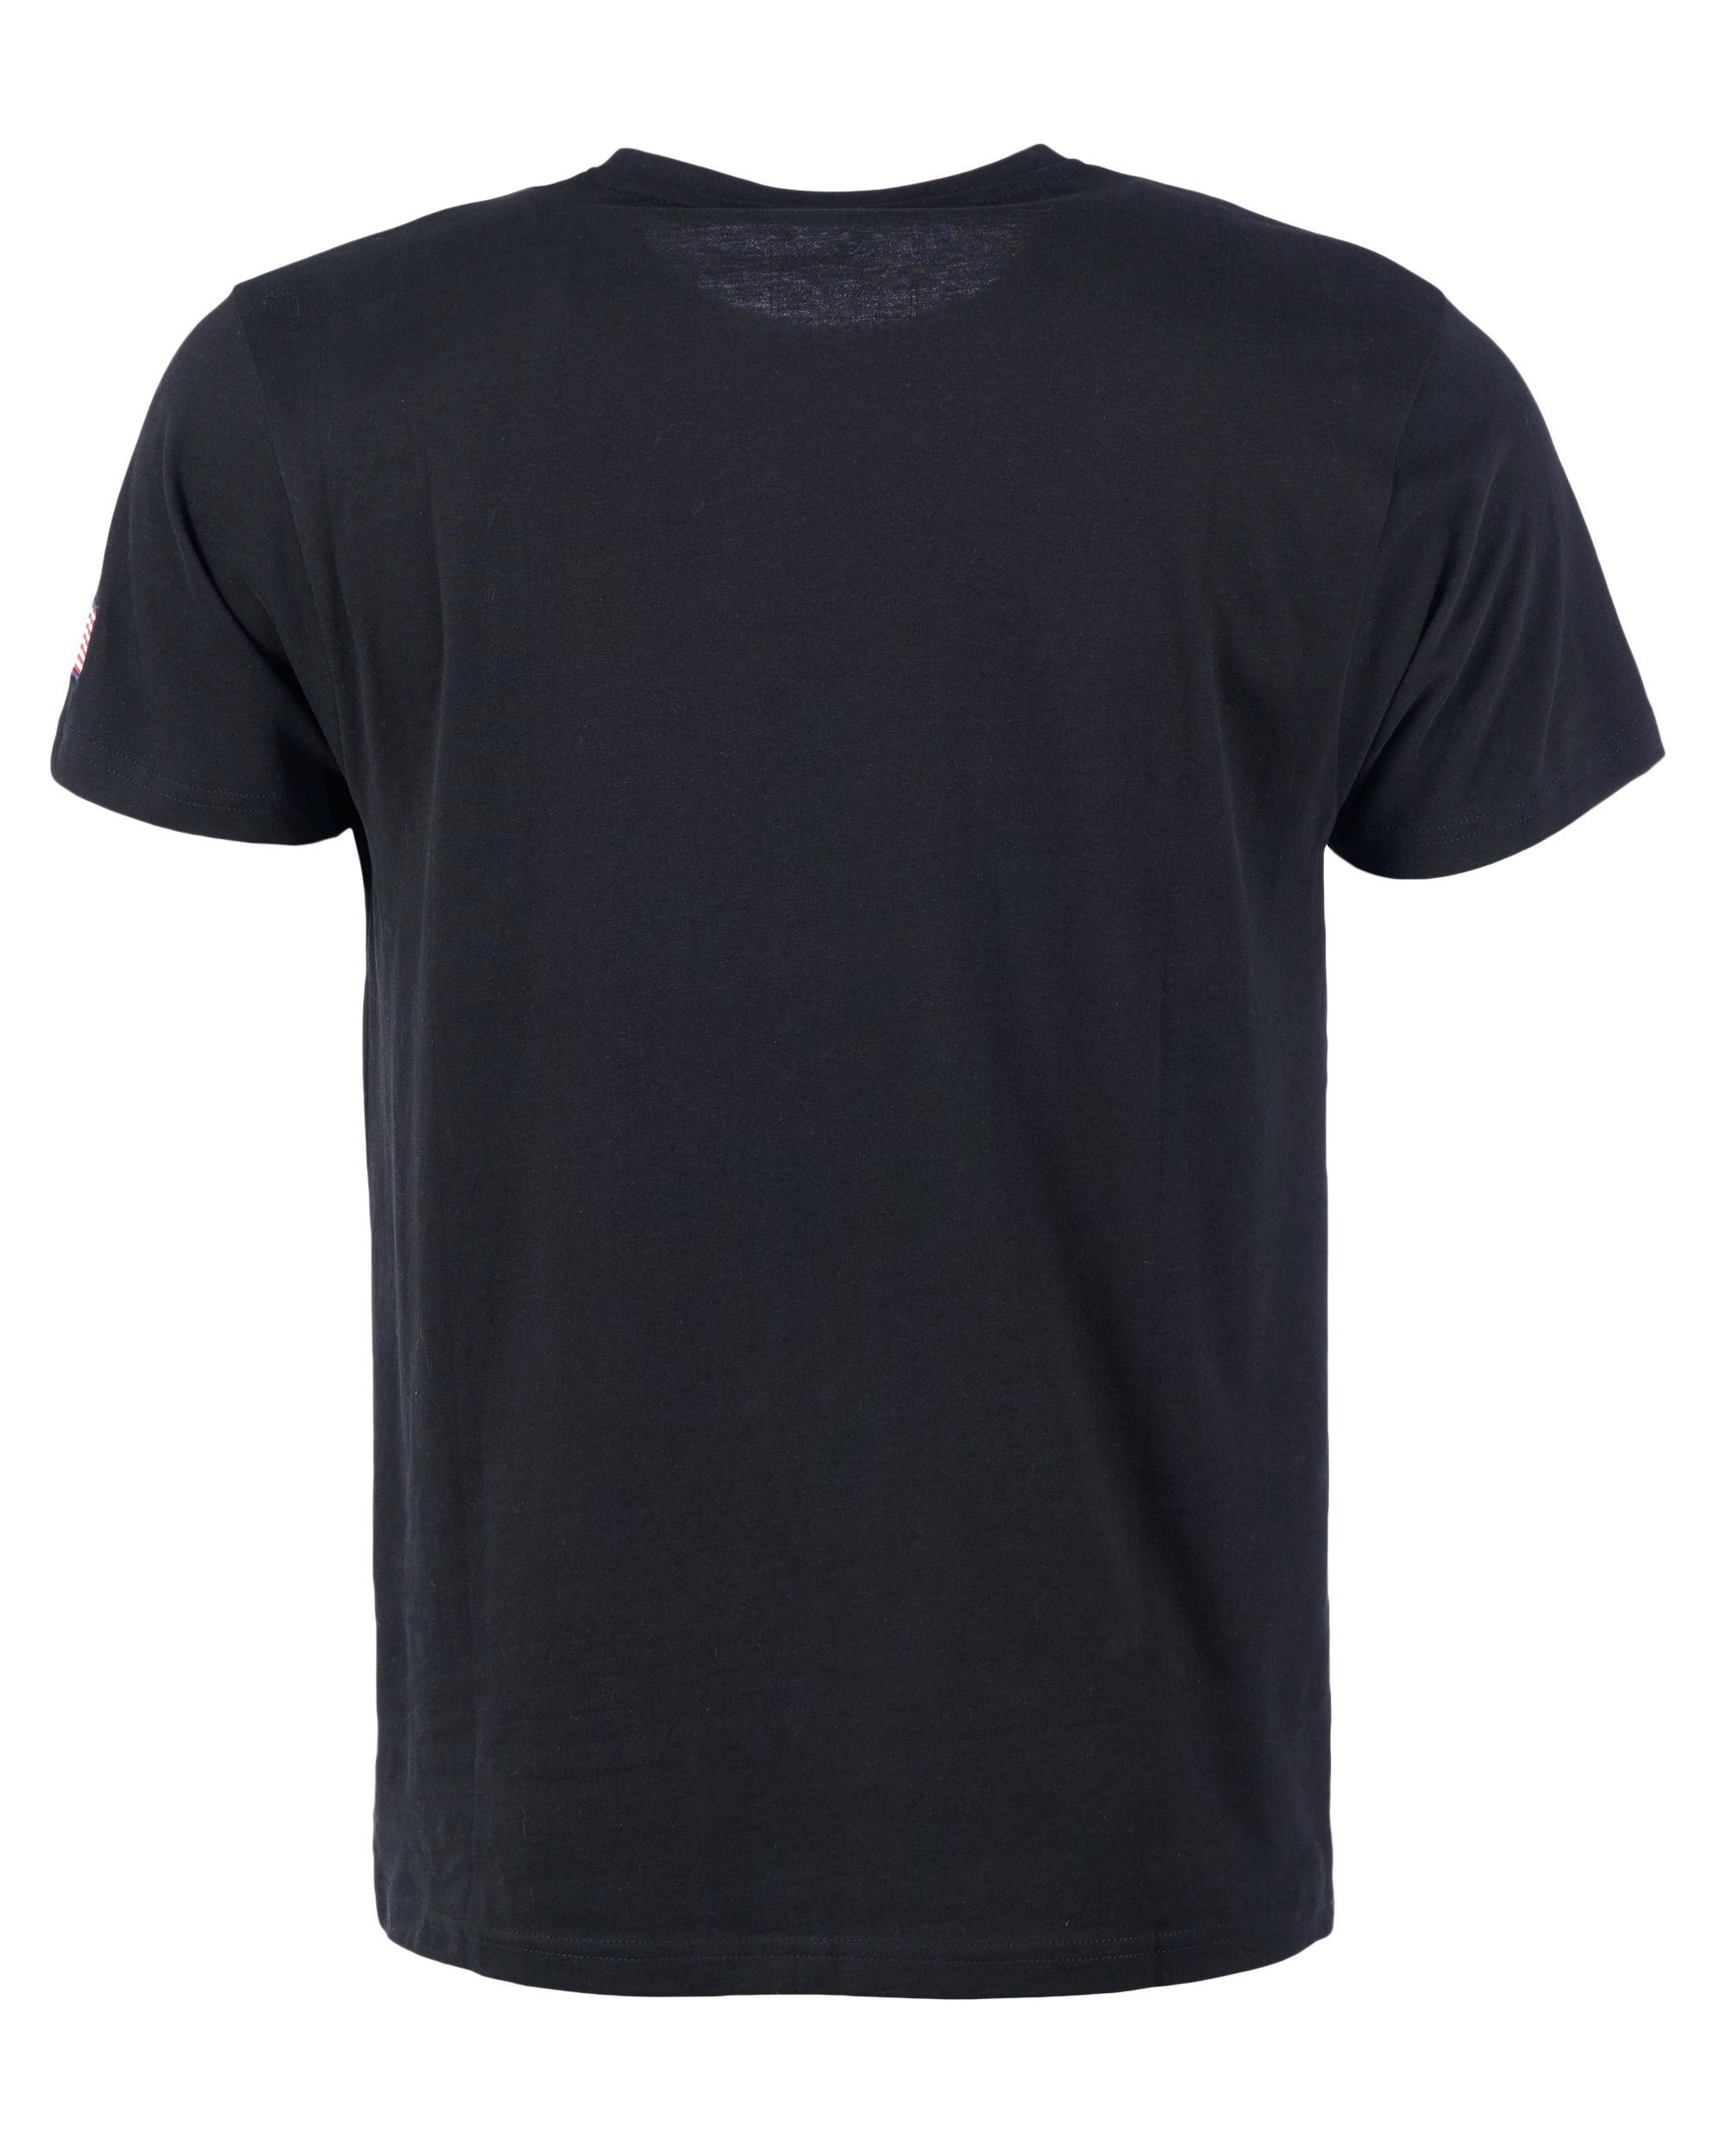 TOP GUN TG20213006 T-Shirt black